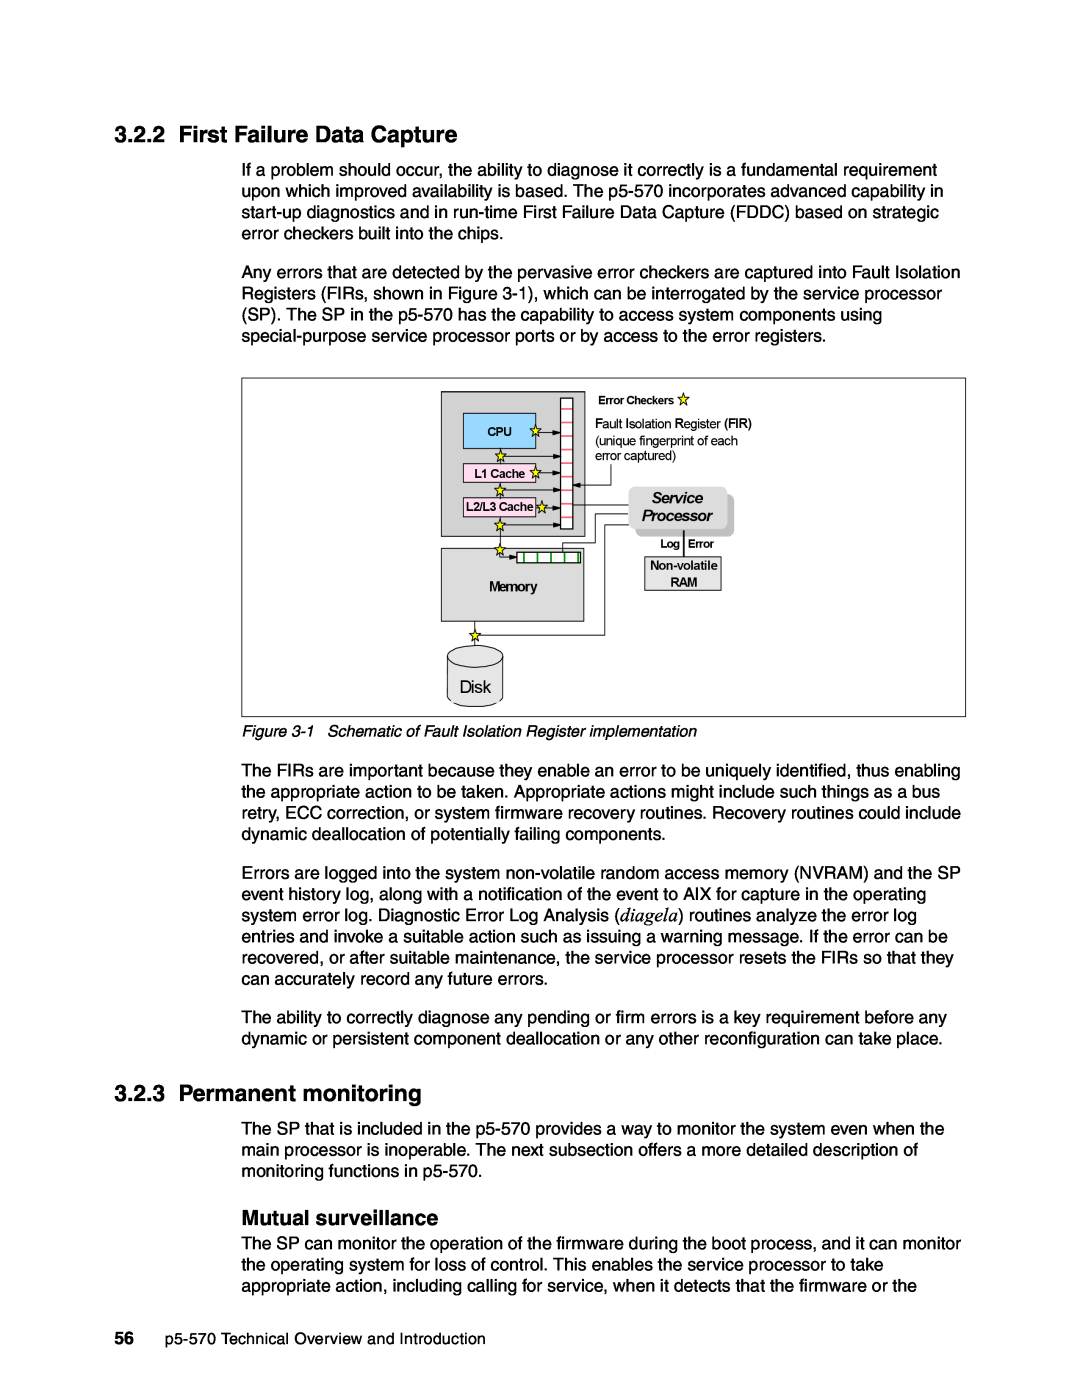 IBM P5 570 manual First Failure Data Capture, Permanent monitoring, Mutual surveillance 